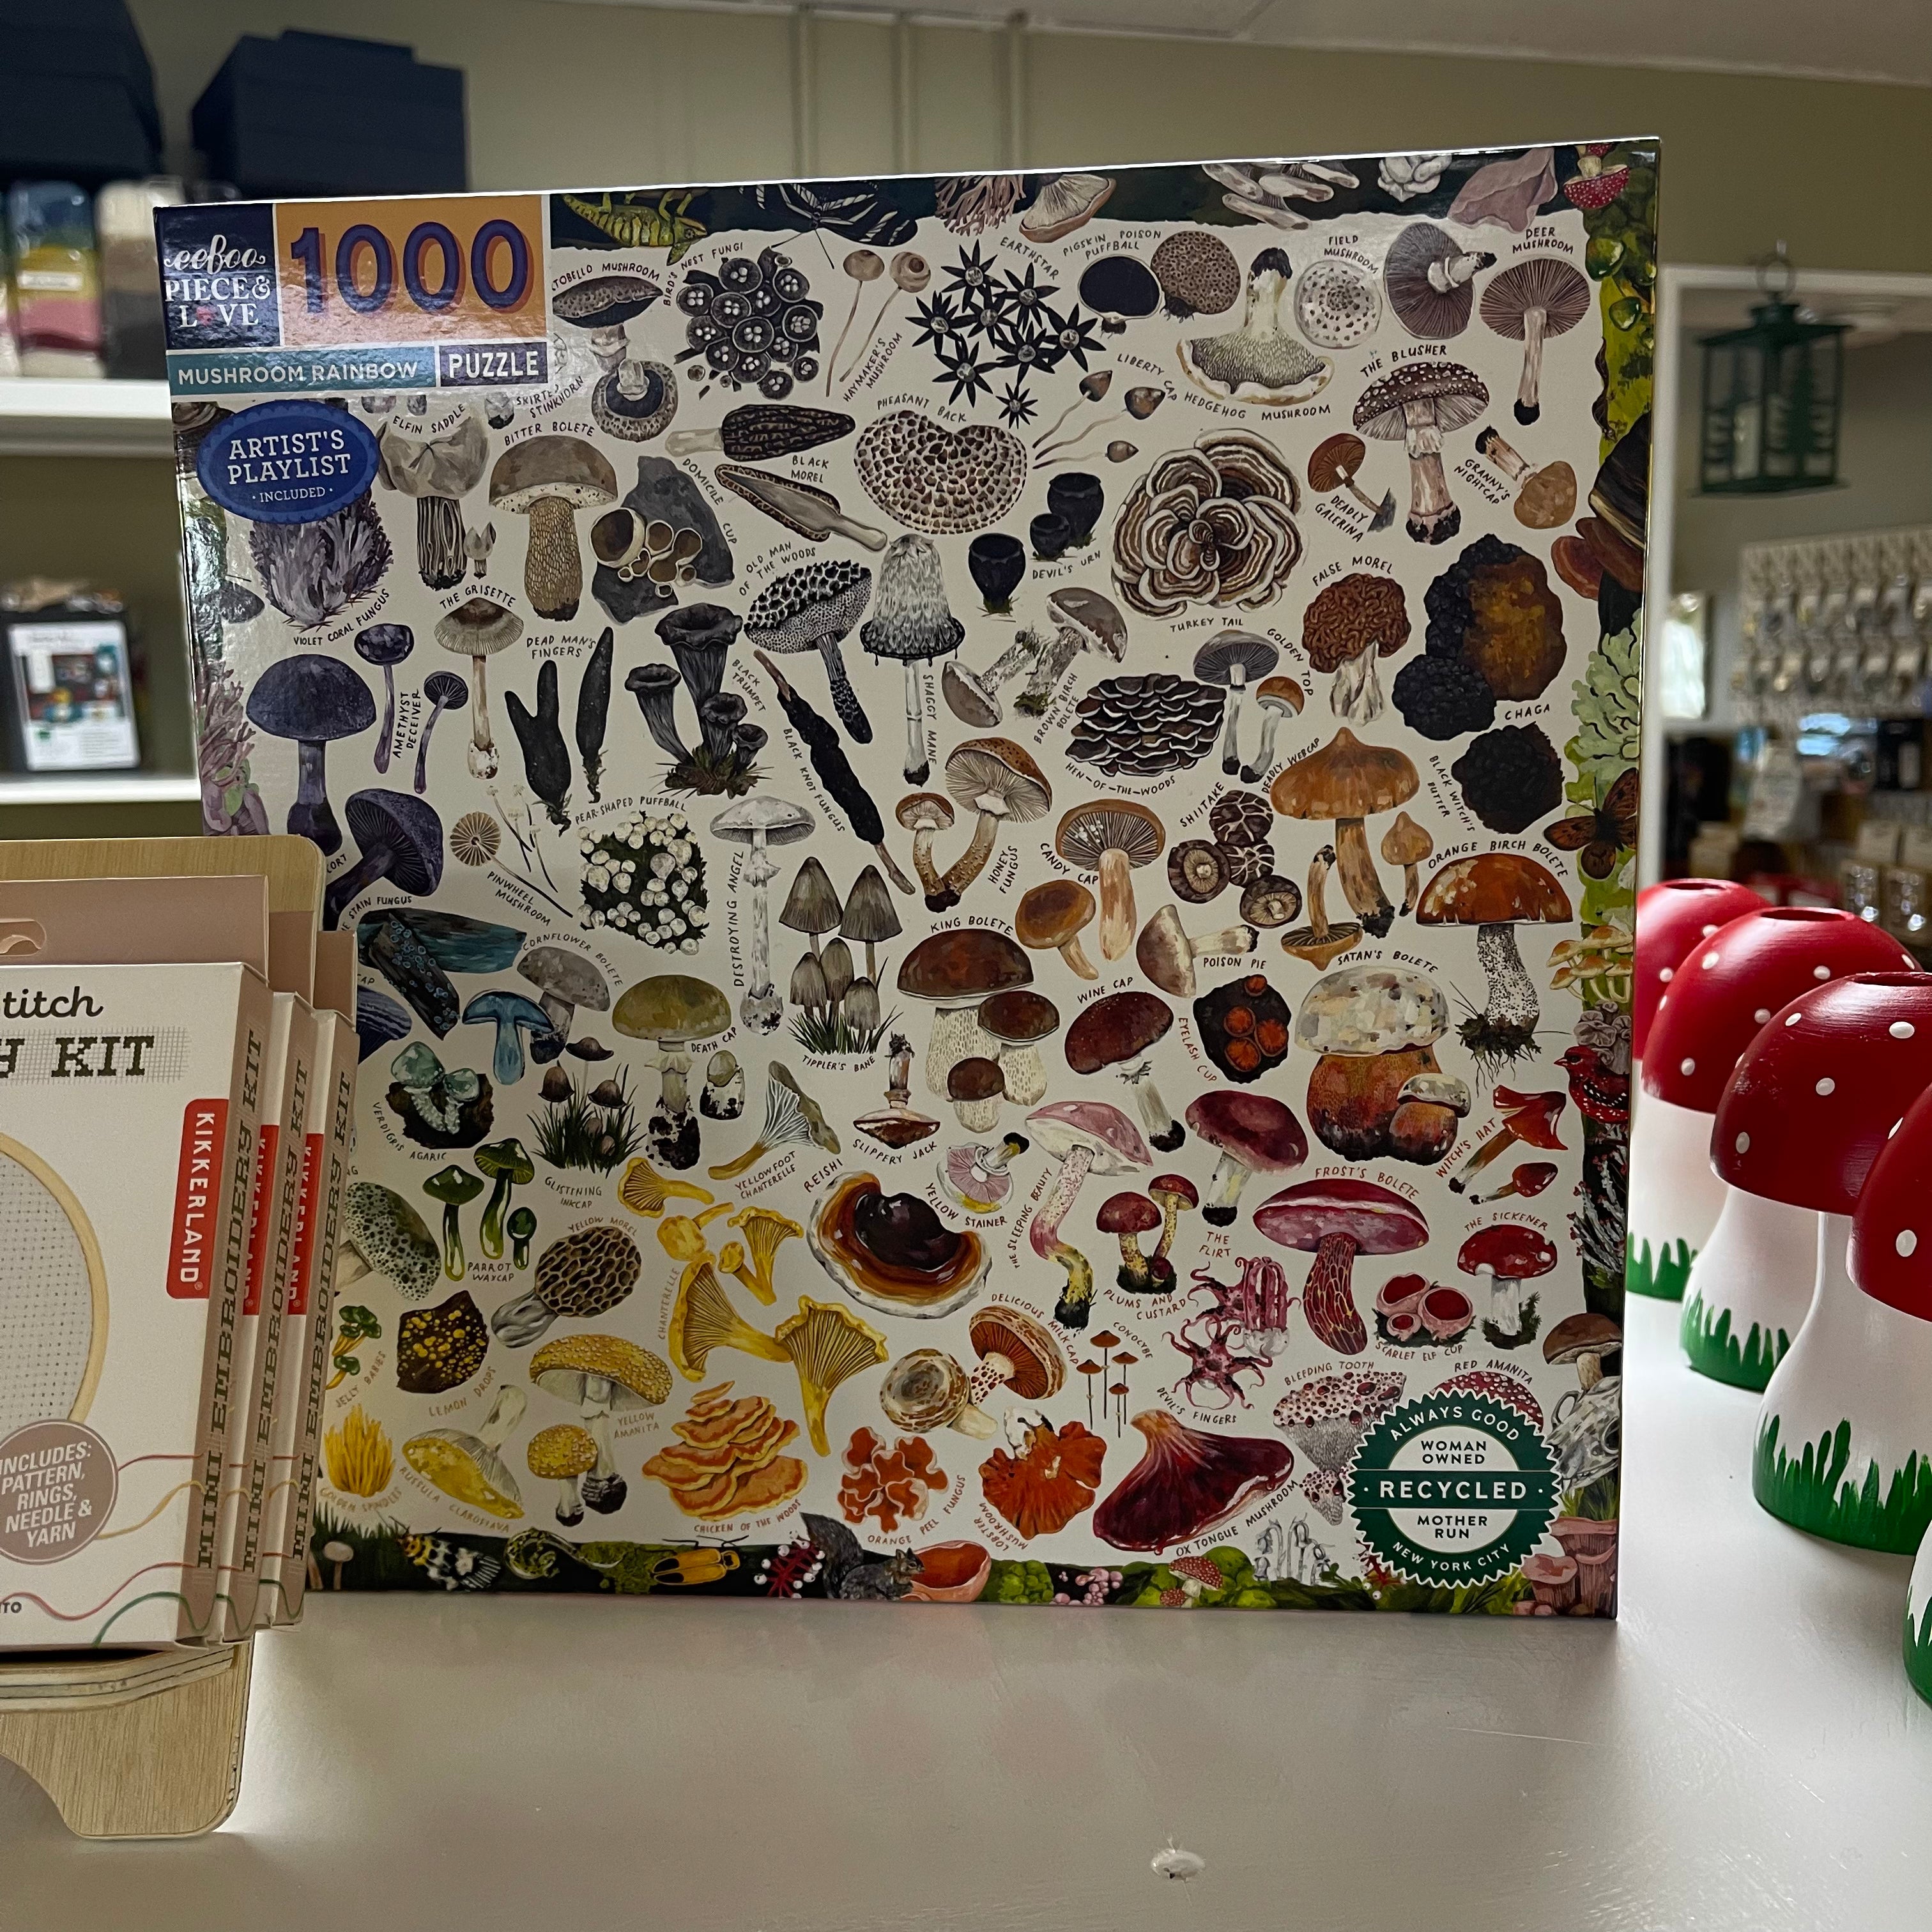 Mushroom Rainbow Puzzle - 1000 Piece